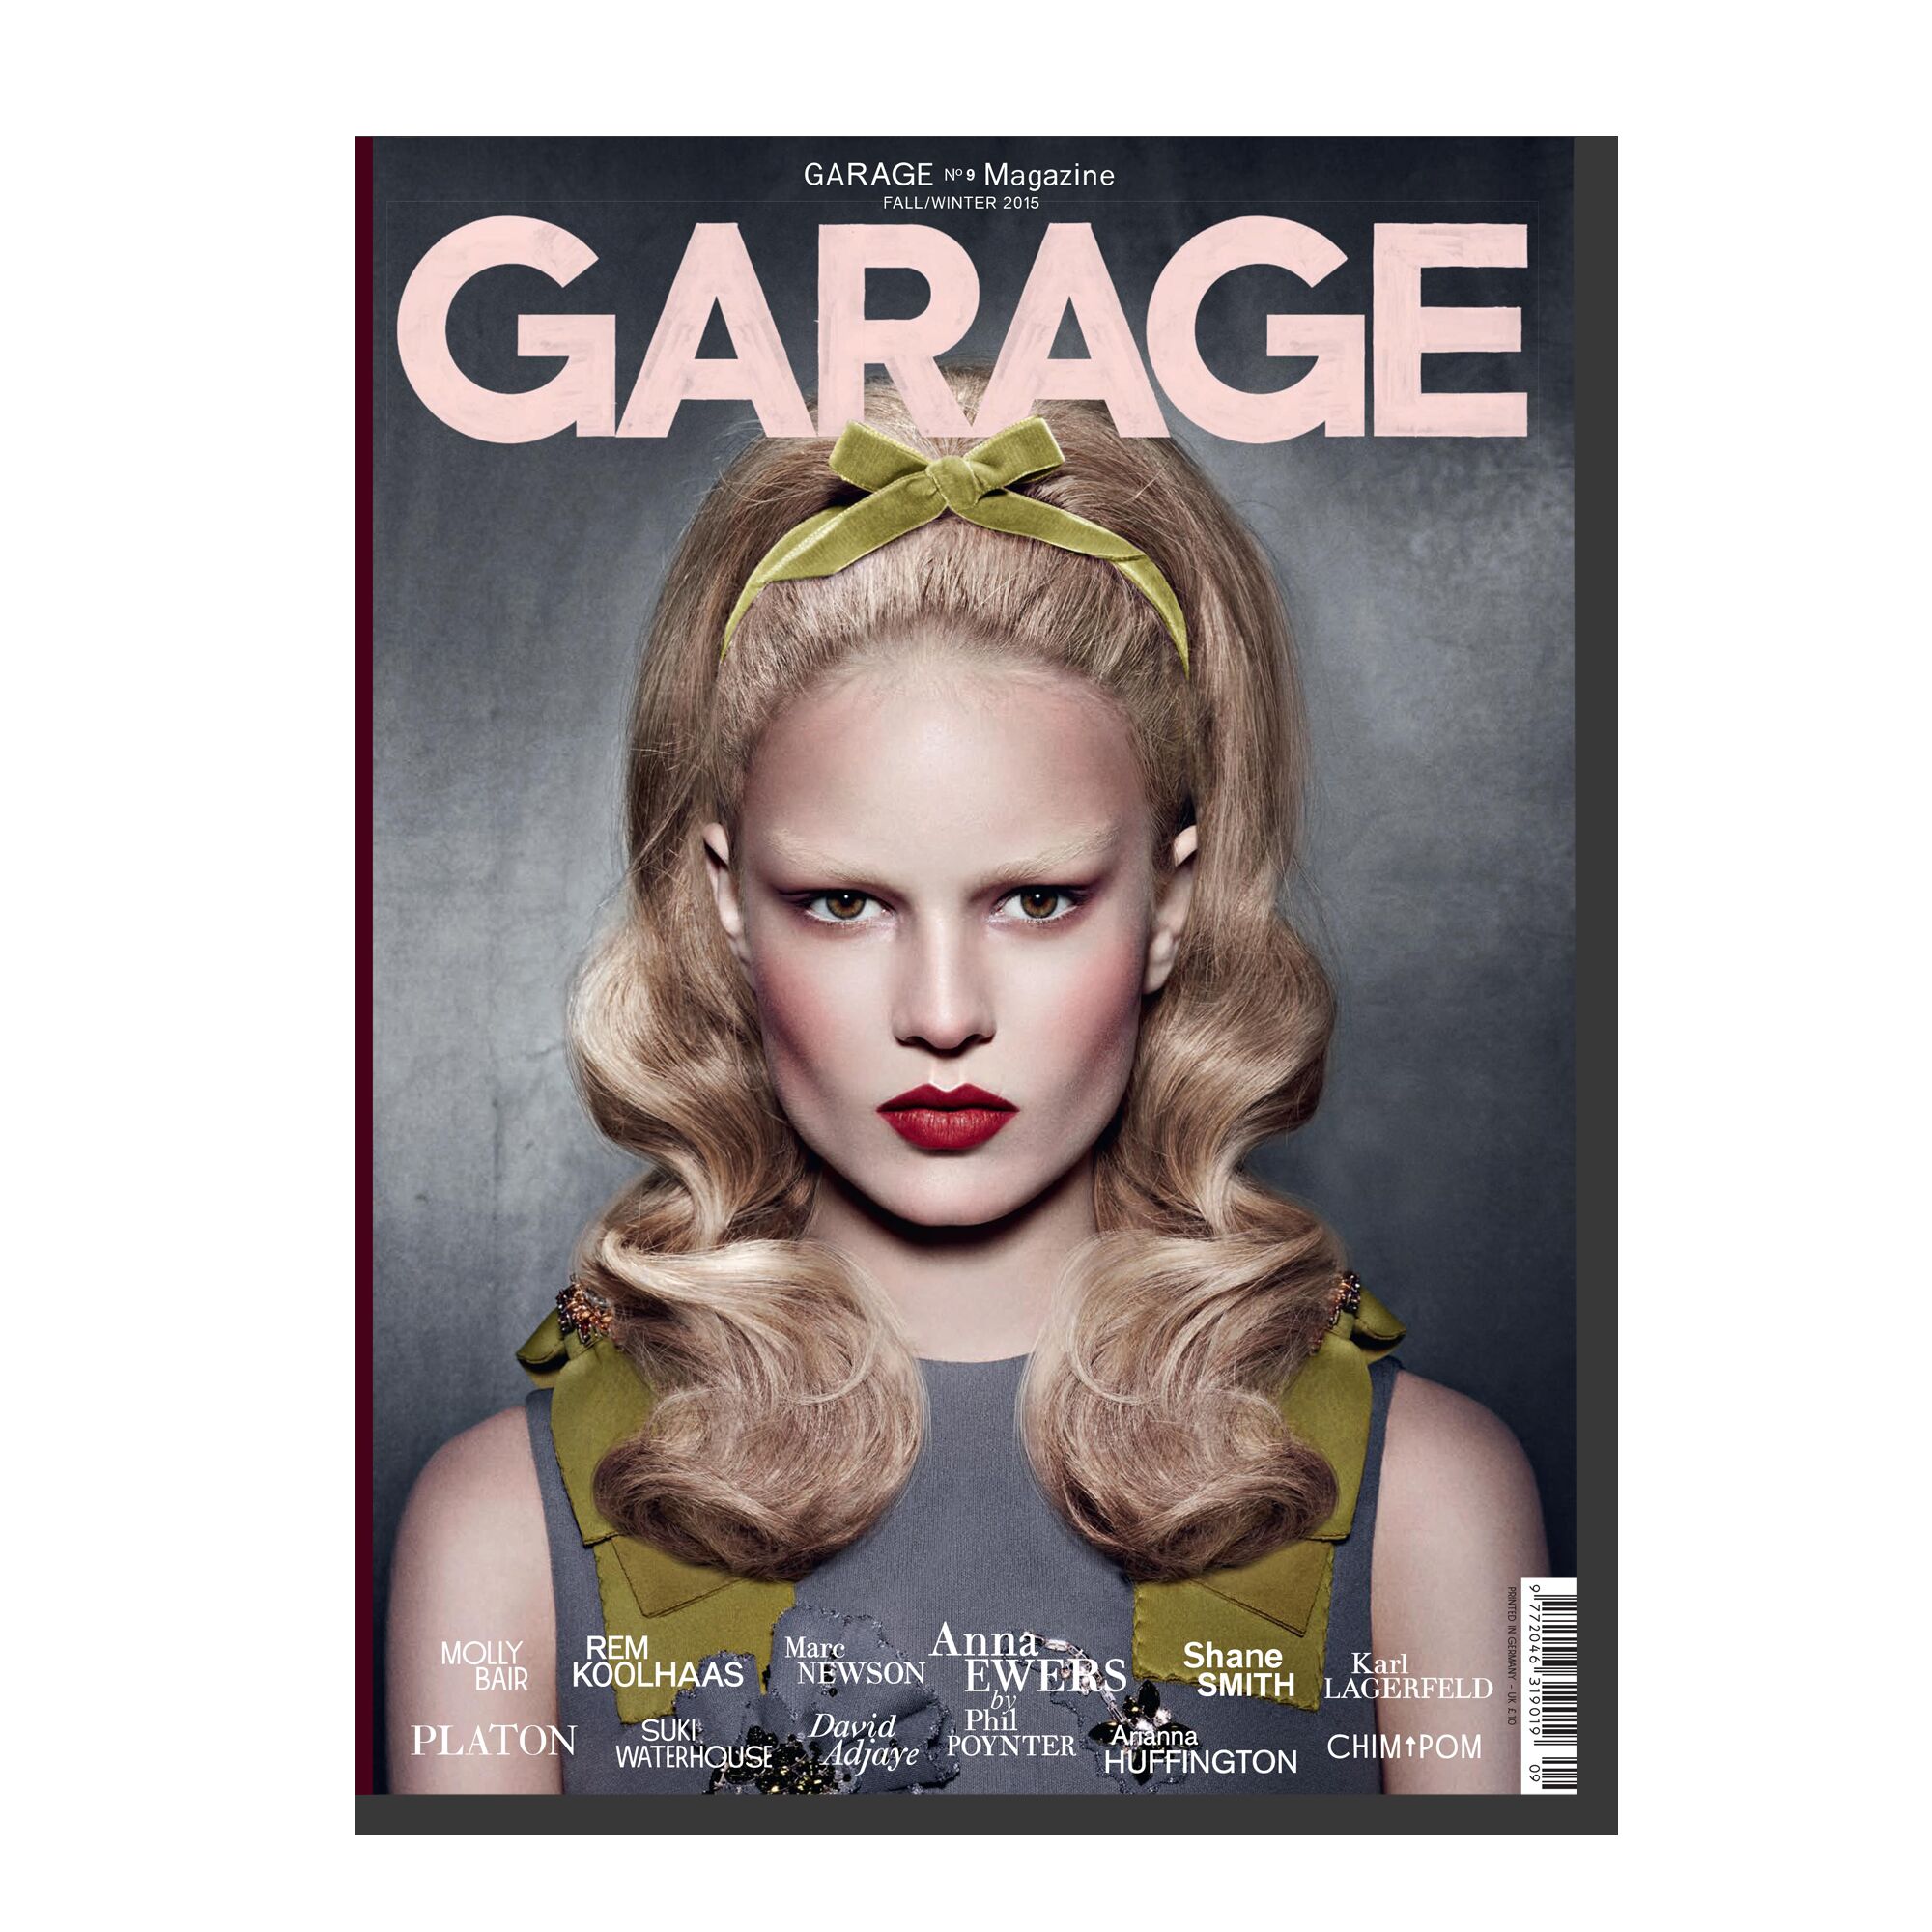 GARAGE Magazine Issue 9 - Fashion Cover